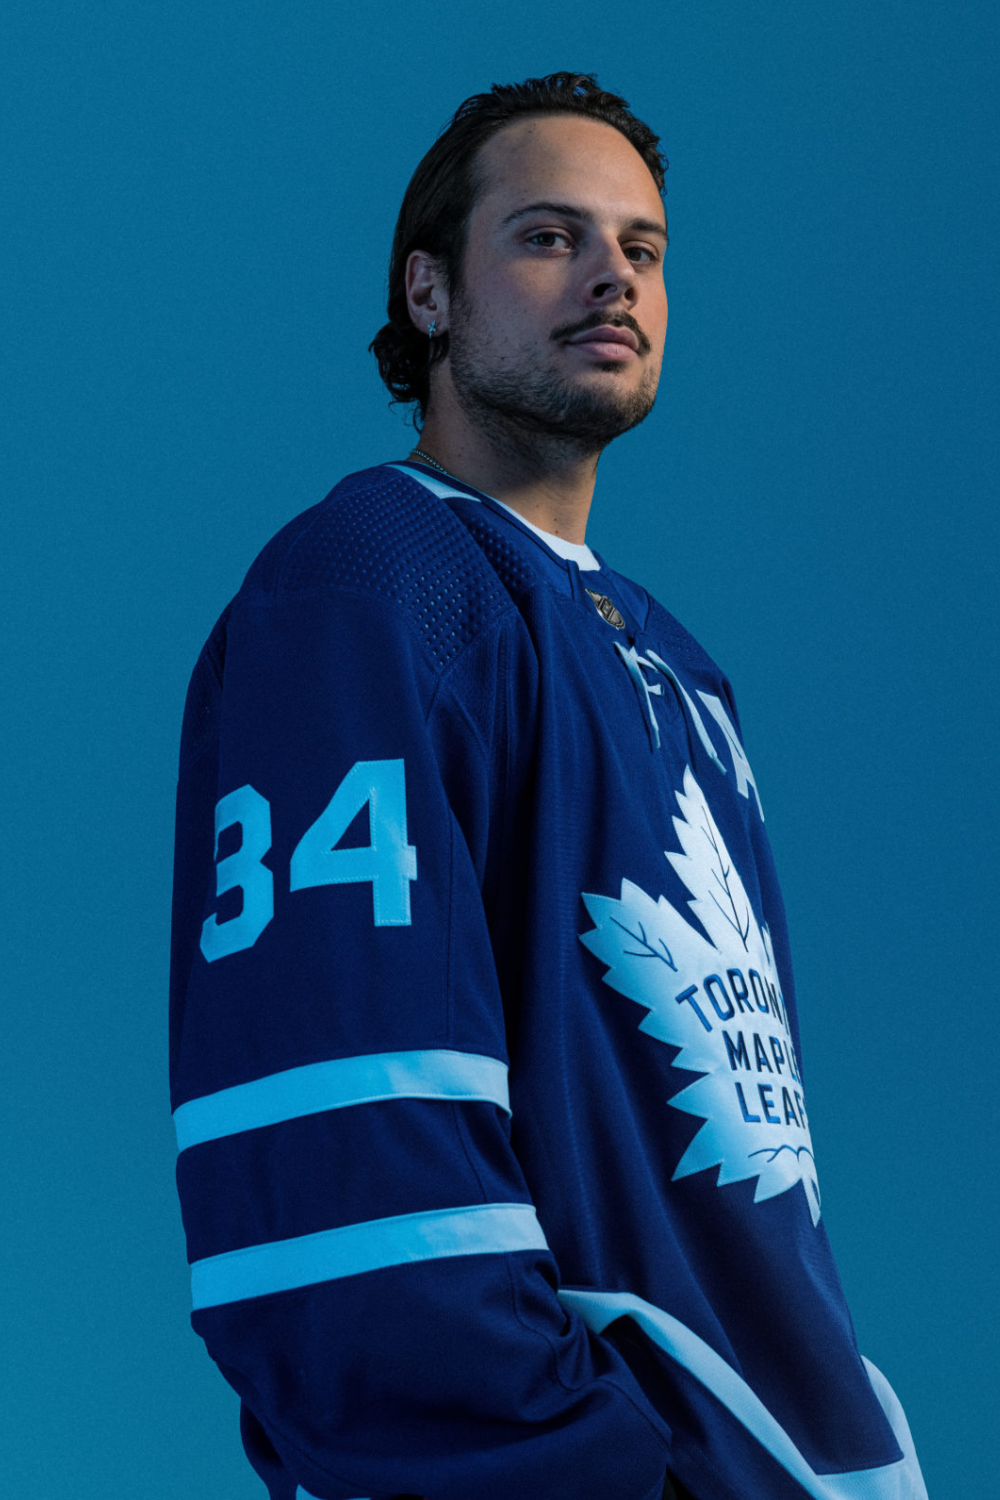 Auston Matthews, A Center For Toronto Maple Leafs